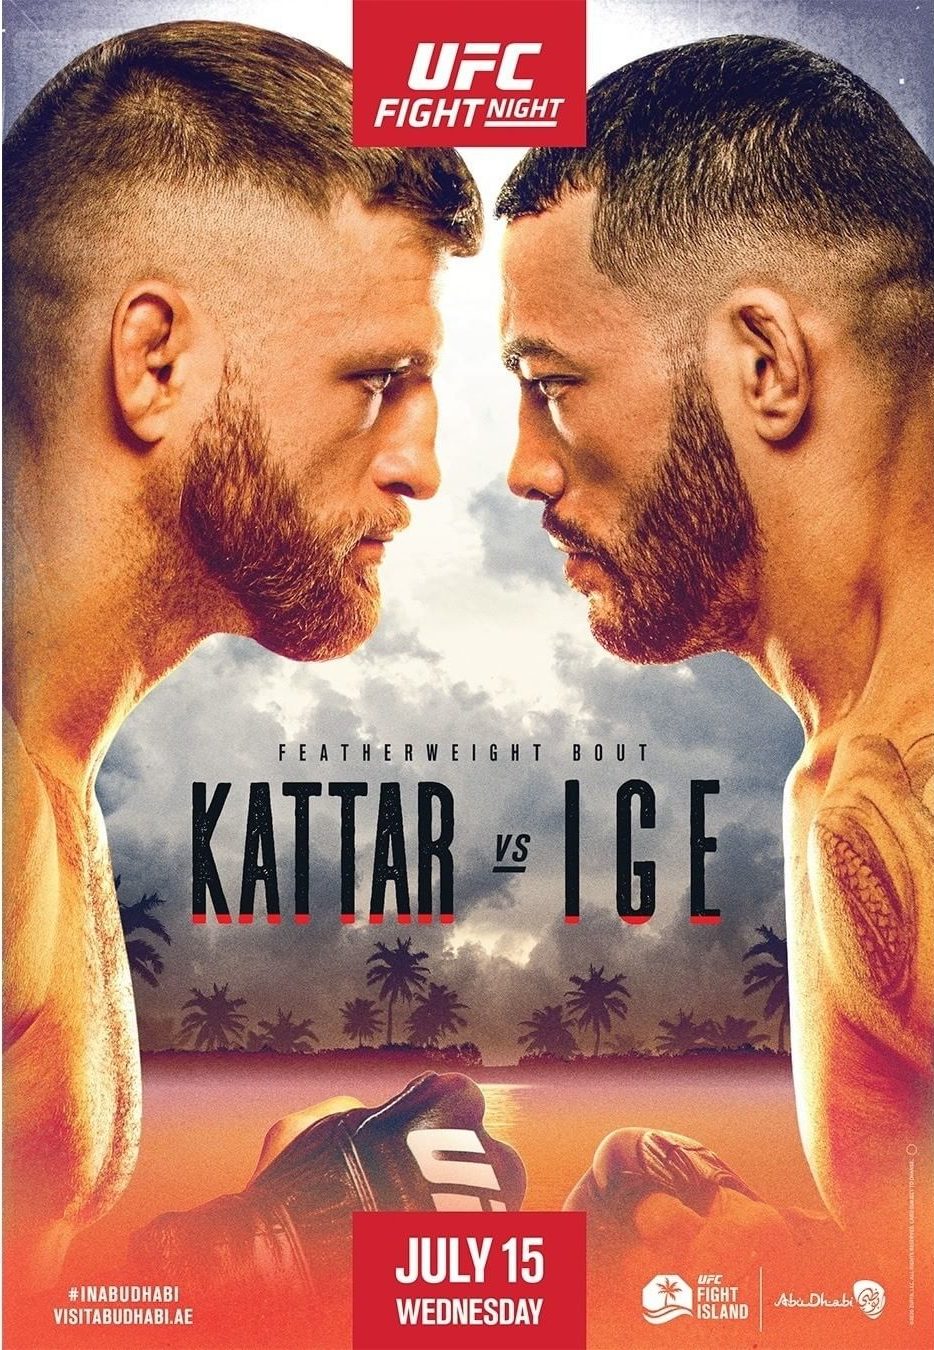 Kattar vs Ige